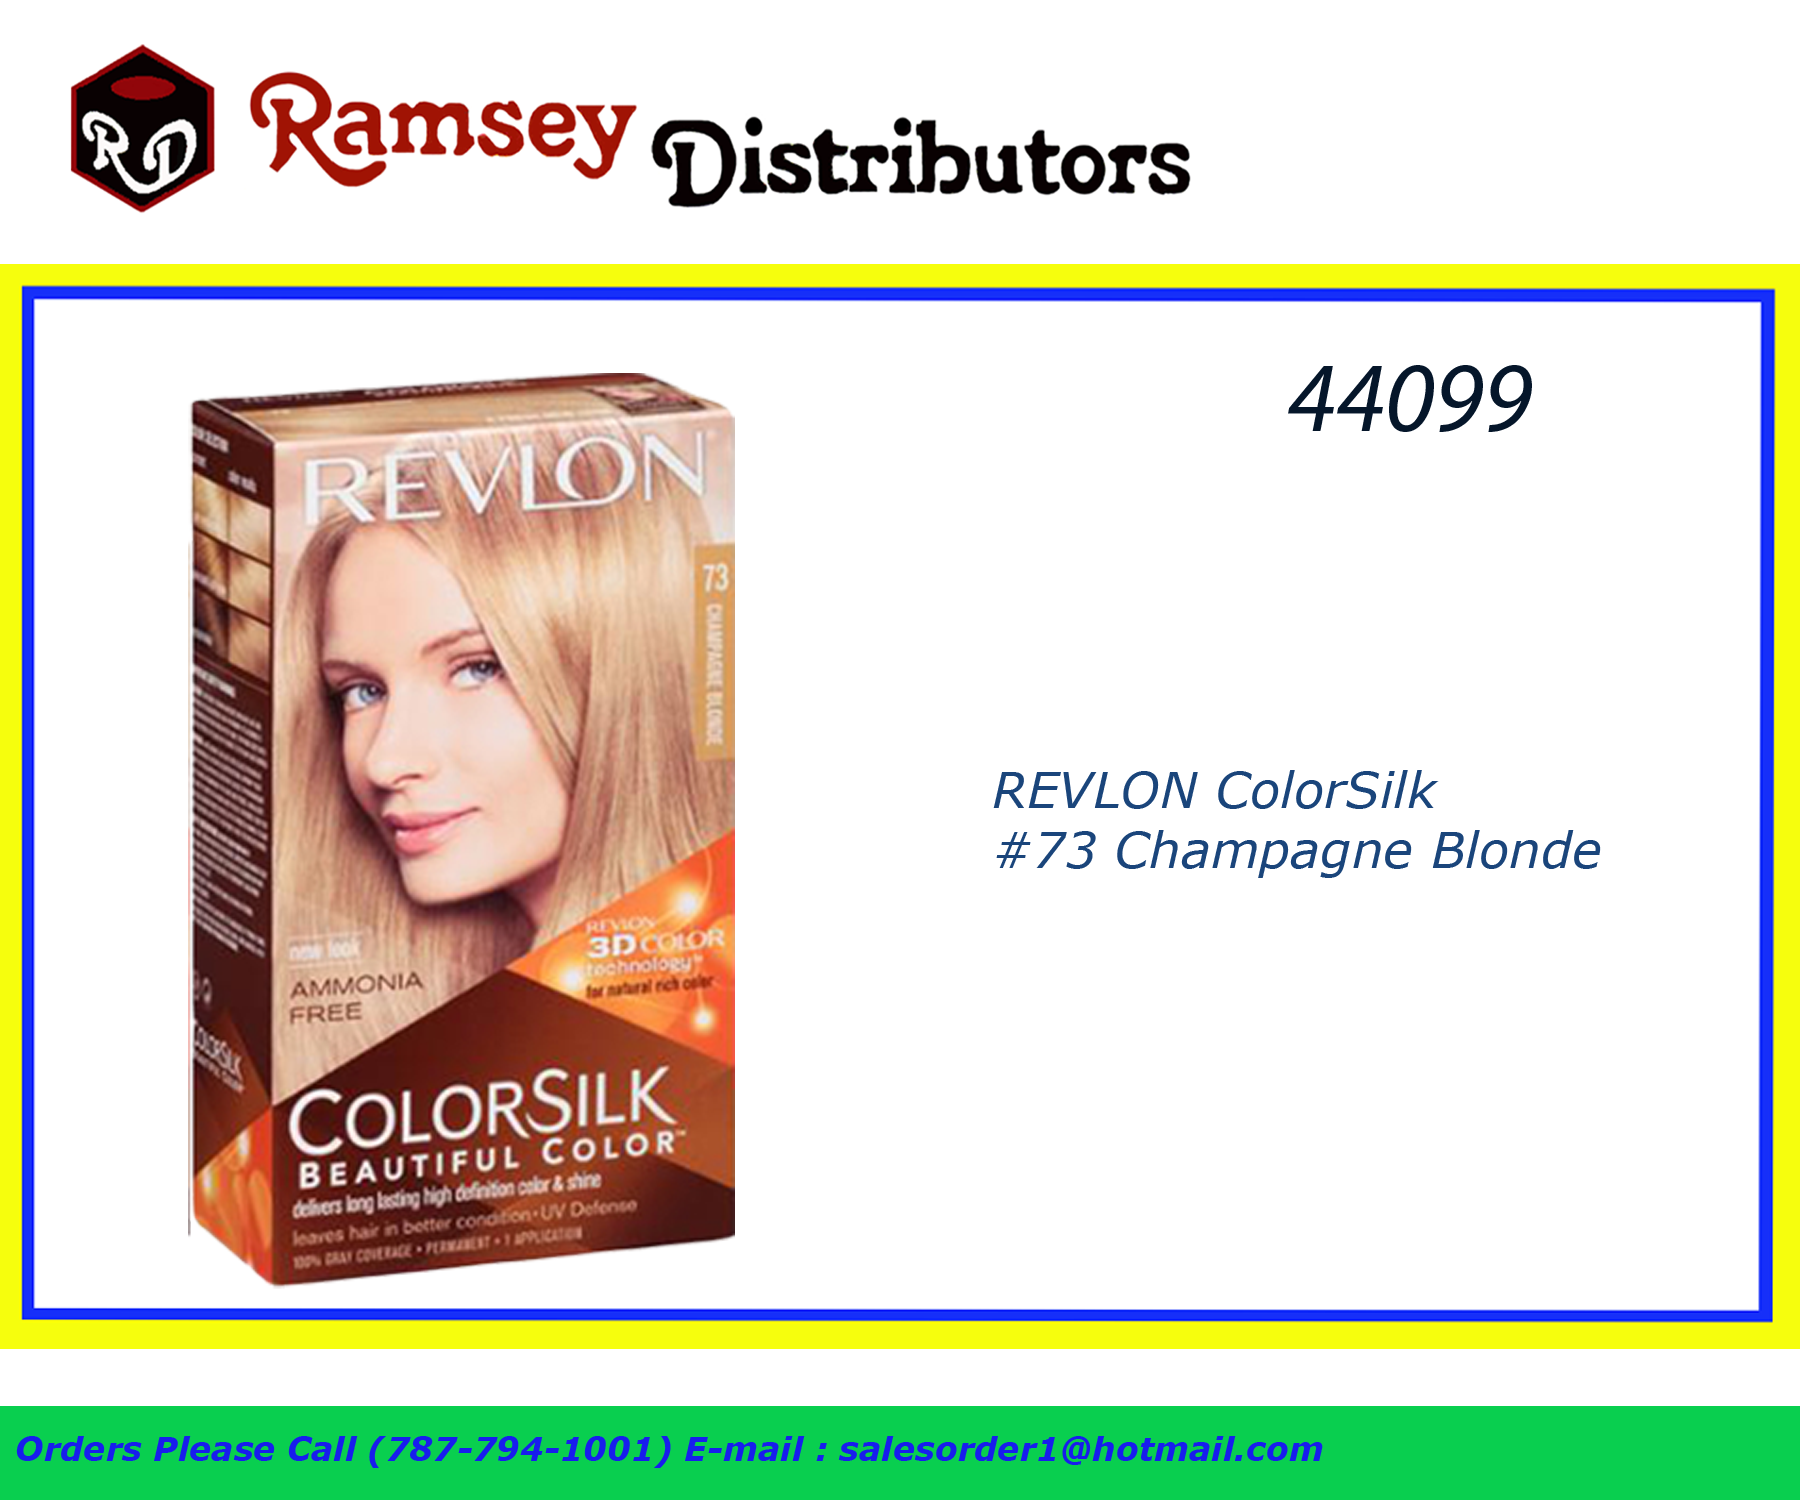 4. Revlon Colorsilk Beautiful Color, 73 Champagne Blonde - wide 5